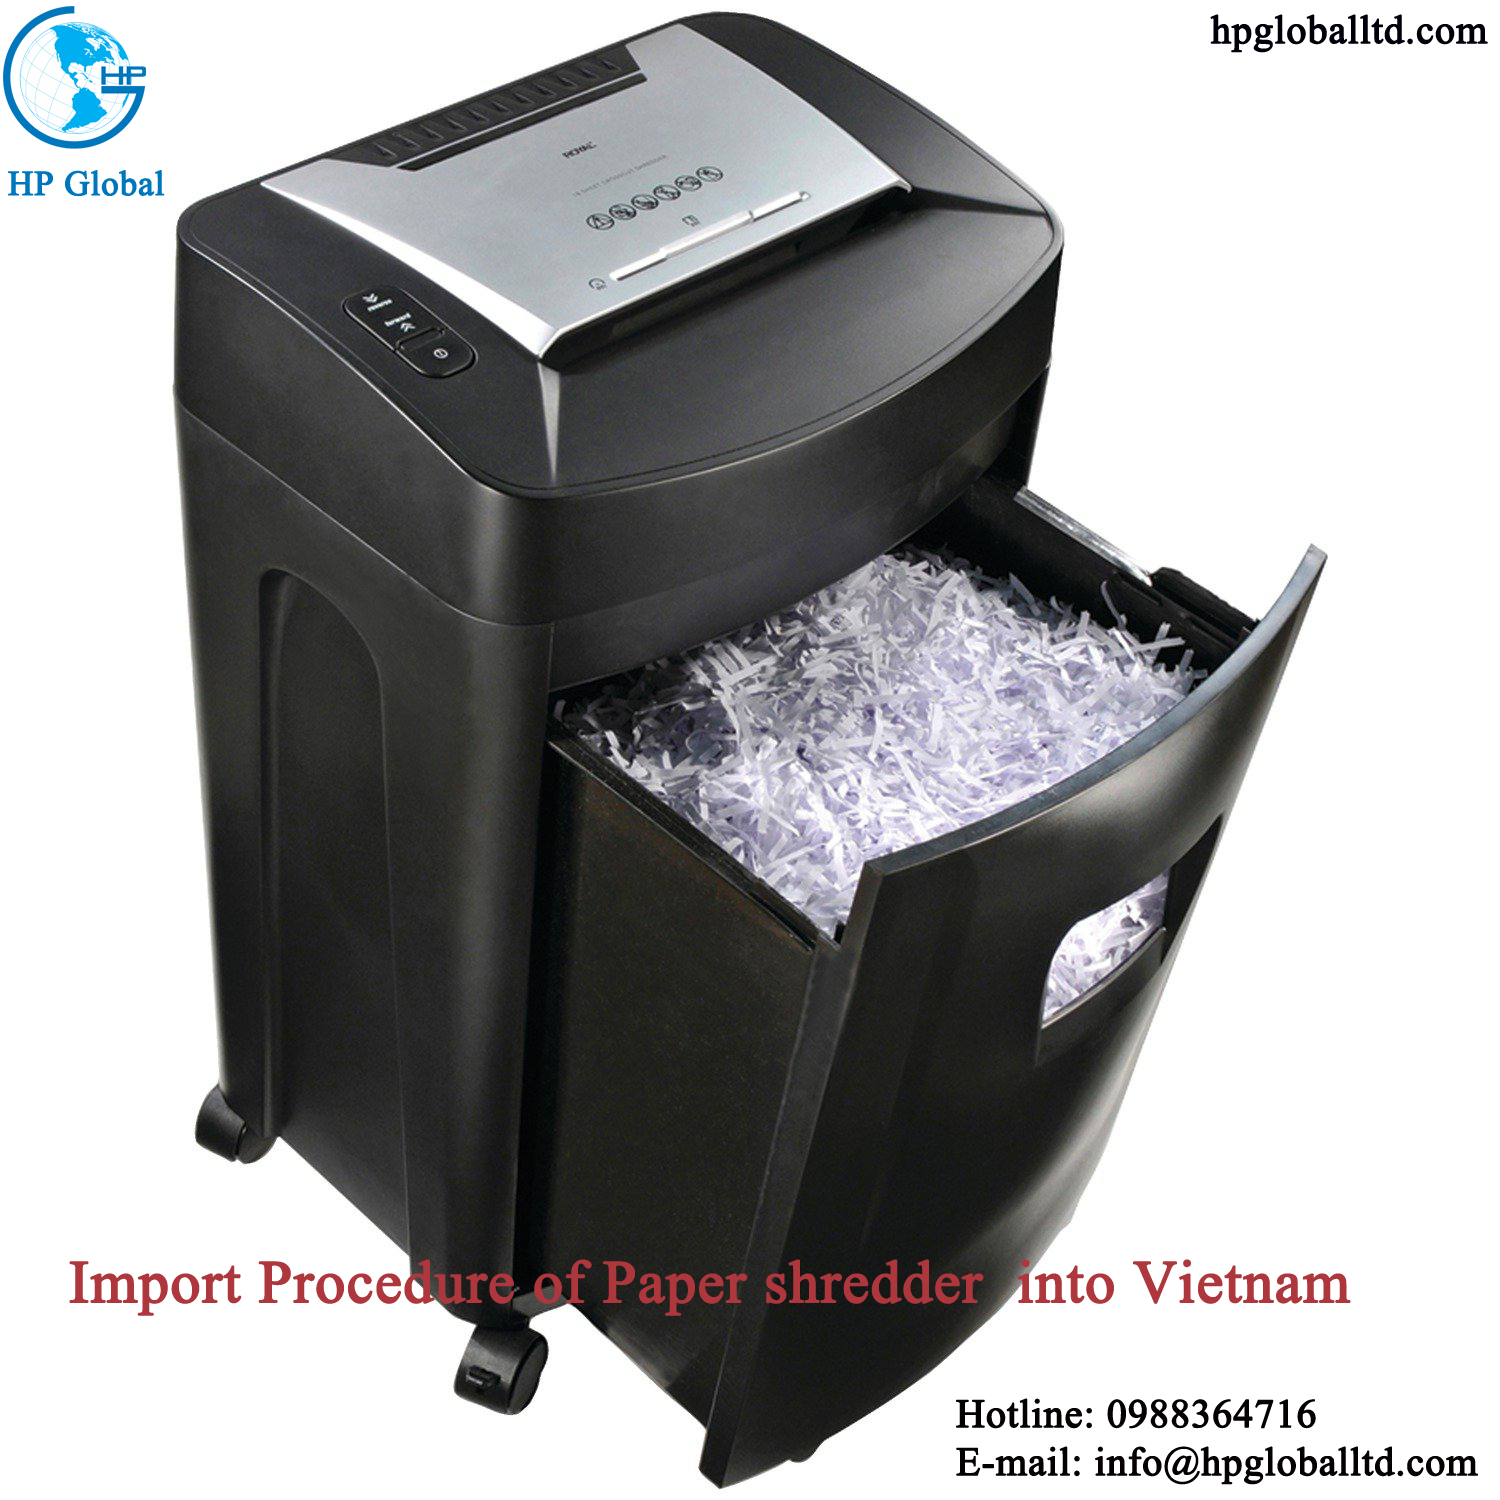 Import Procedure of Paper shredder into Vietnam